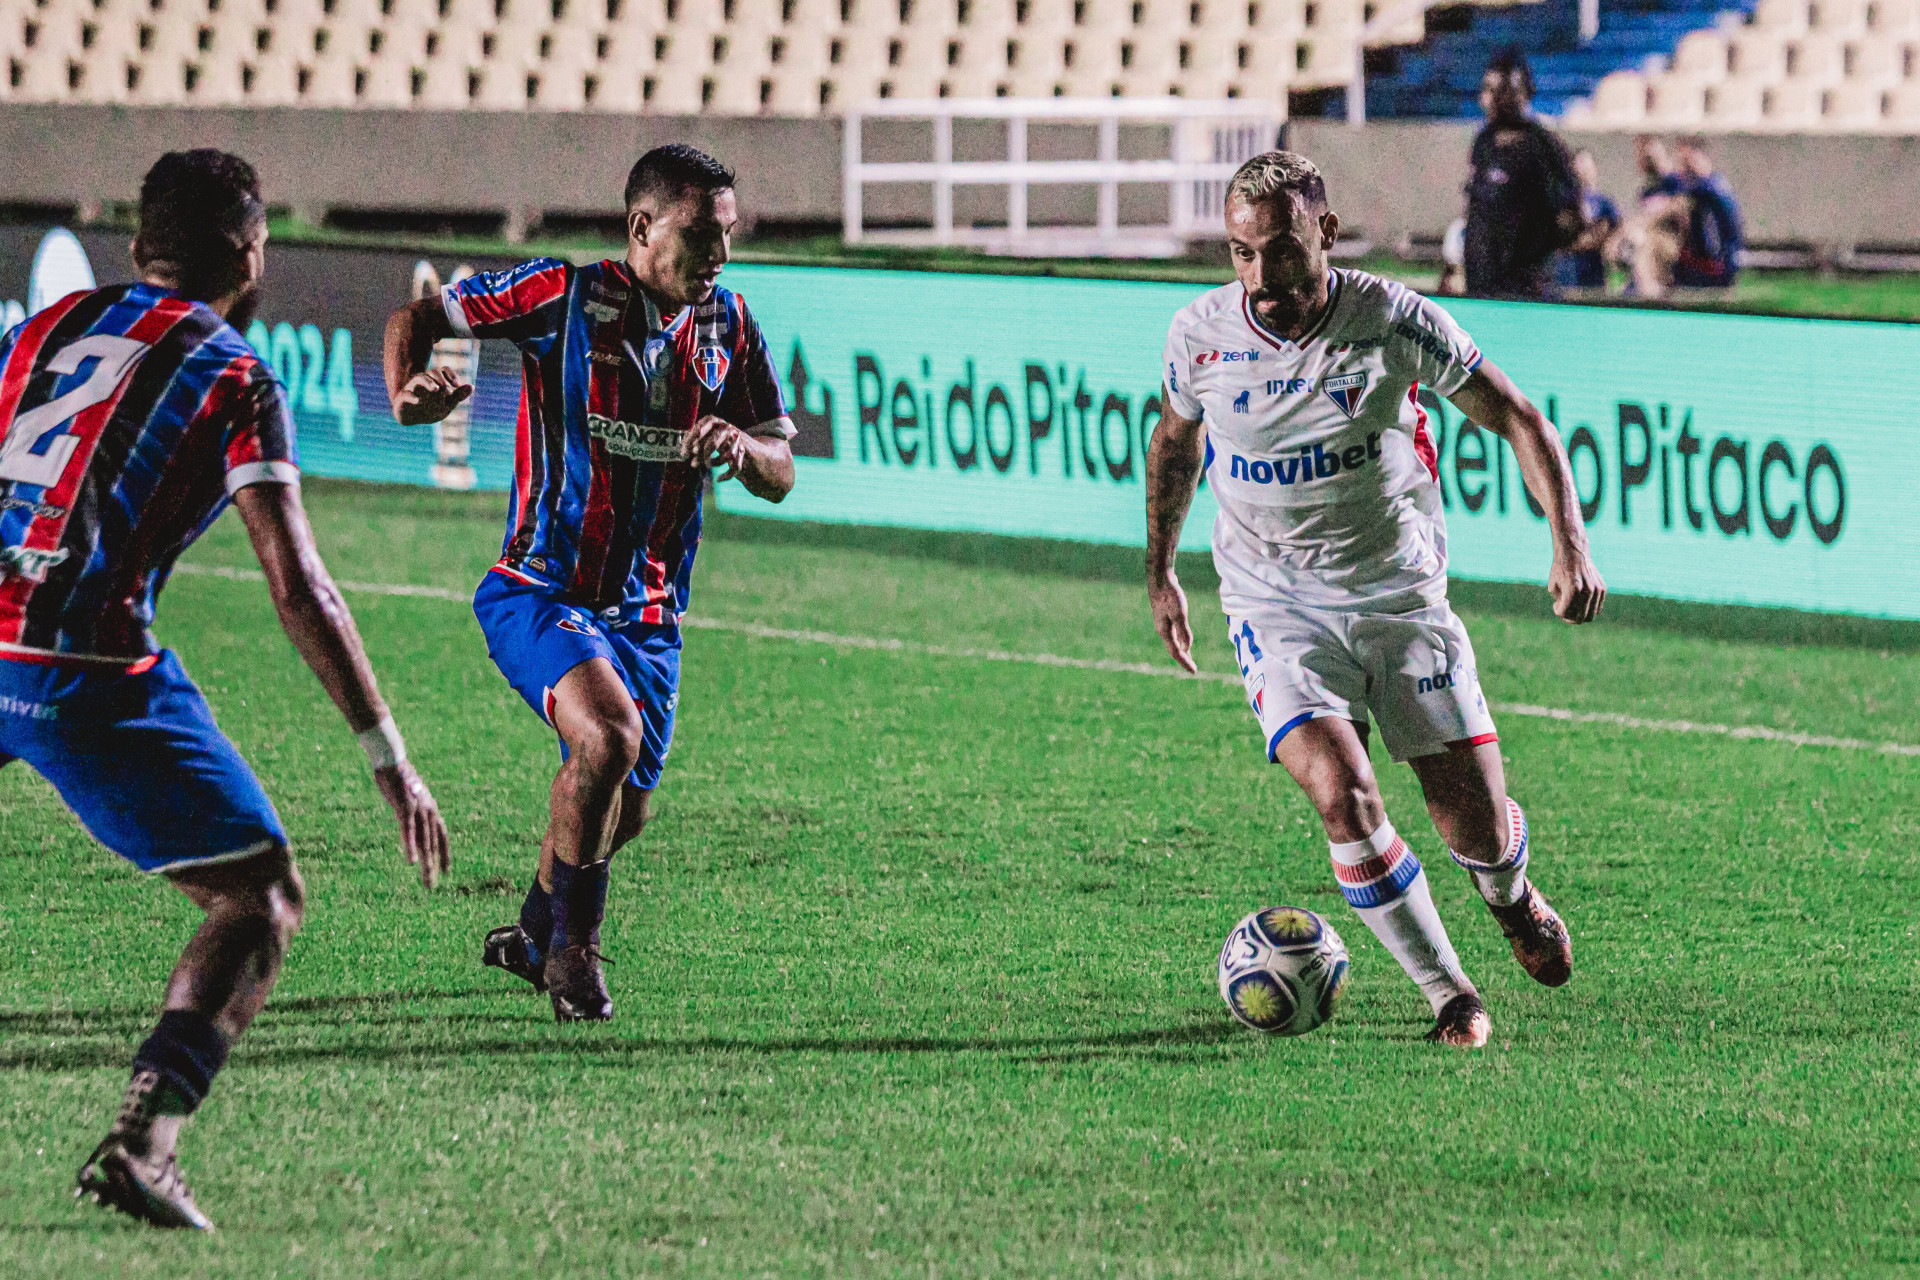 Moisés marcou um dos gols do Fortaleza na partida (Foto: Bruno Oliveira / Fortaleza EC)